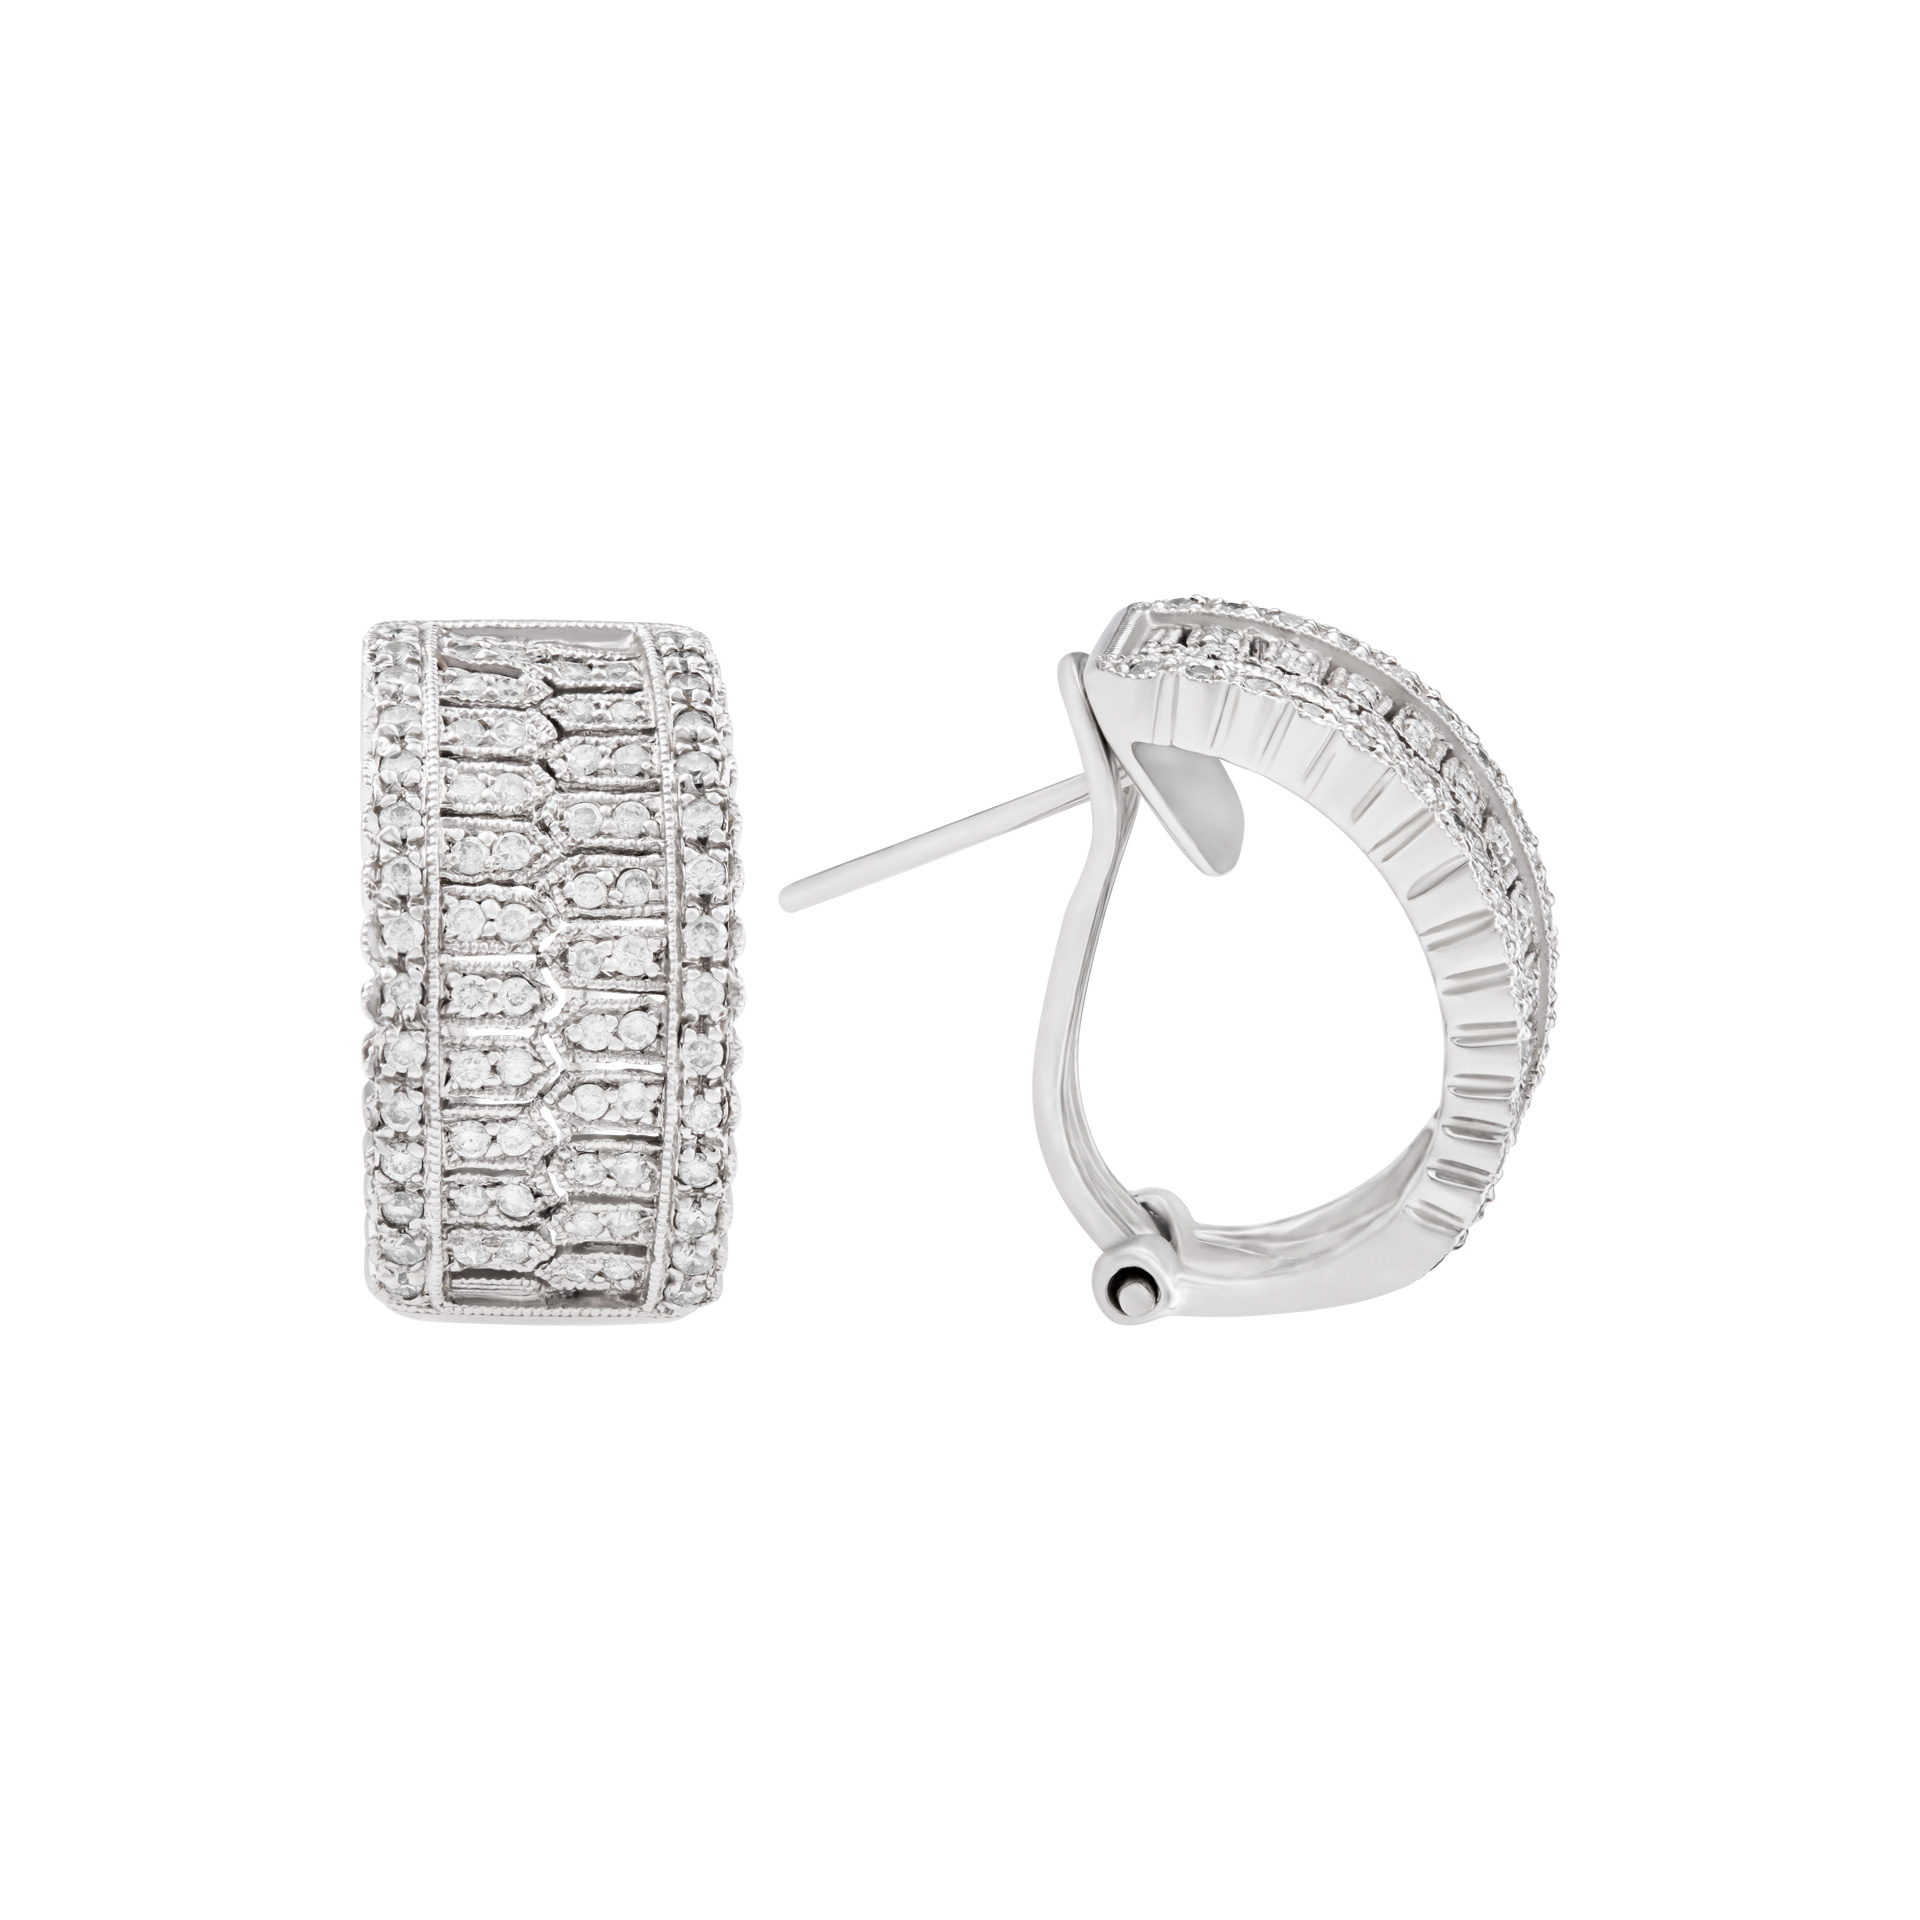 Diamond earrings in 18 white gold